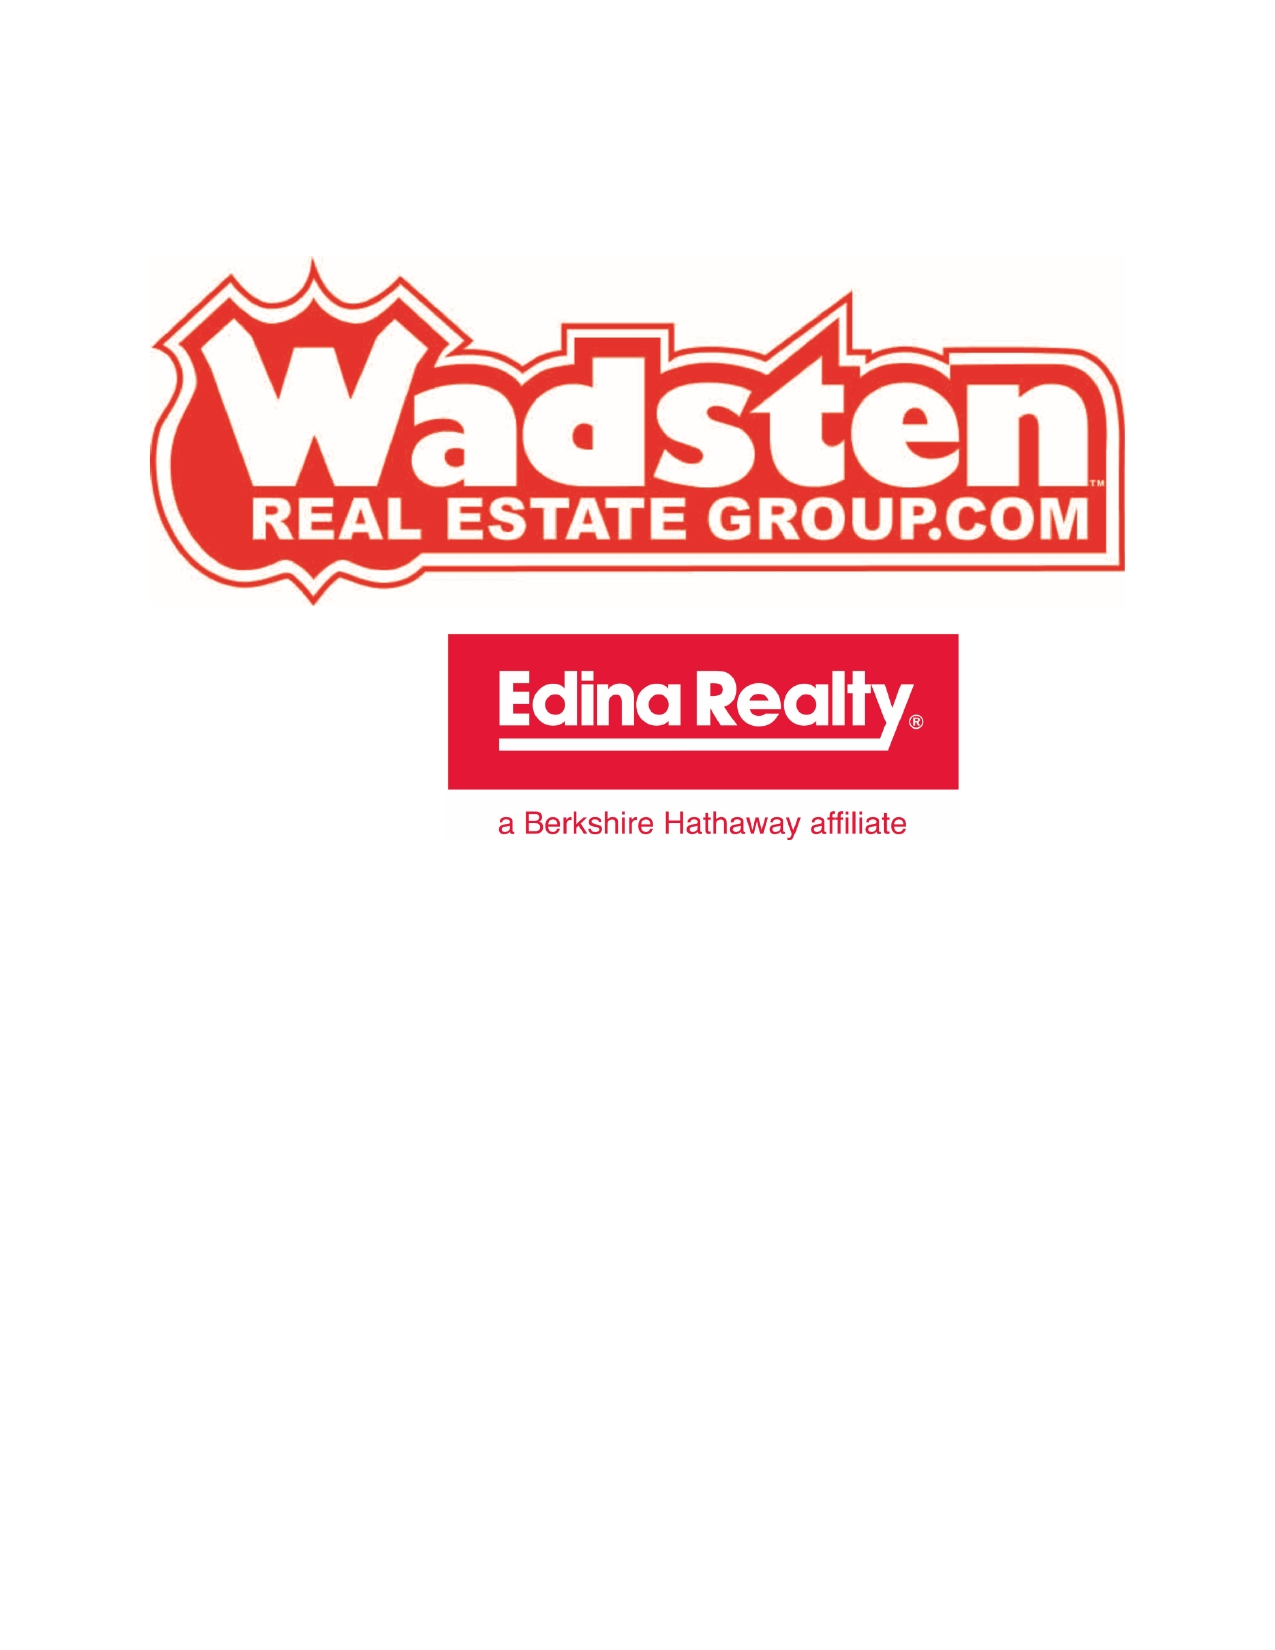 Wadsten Real Estate Group